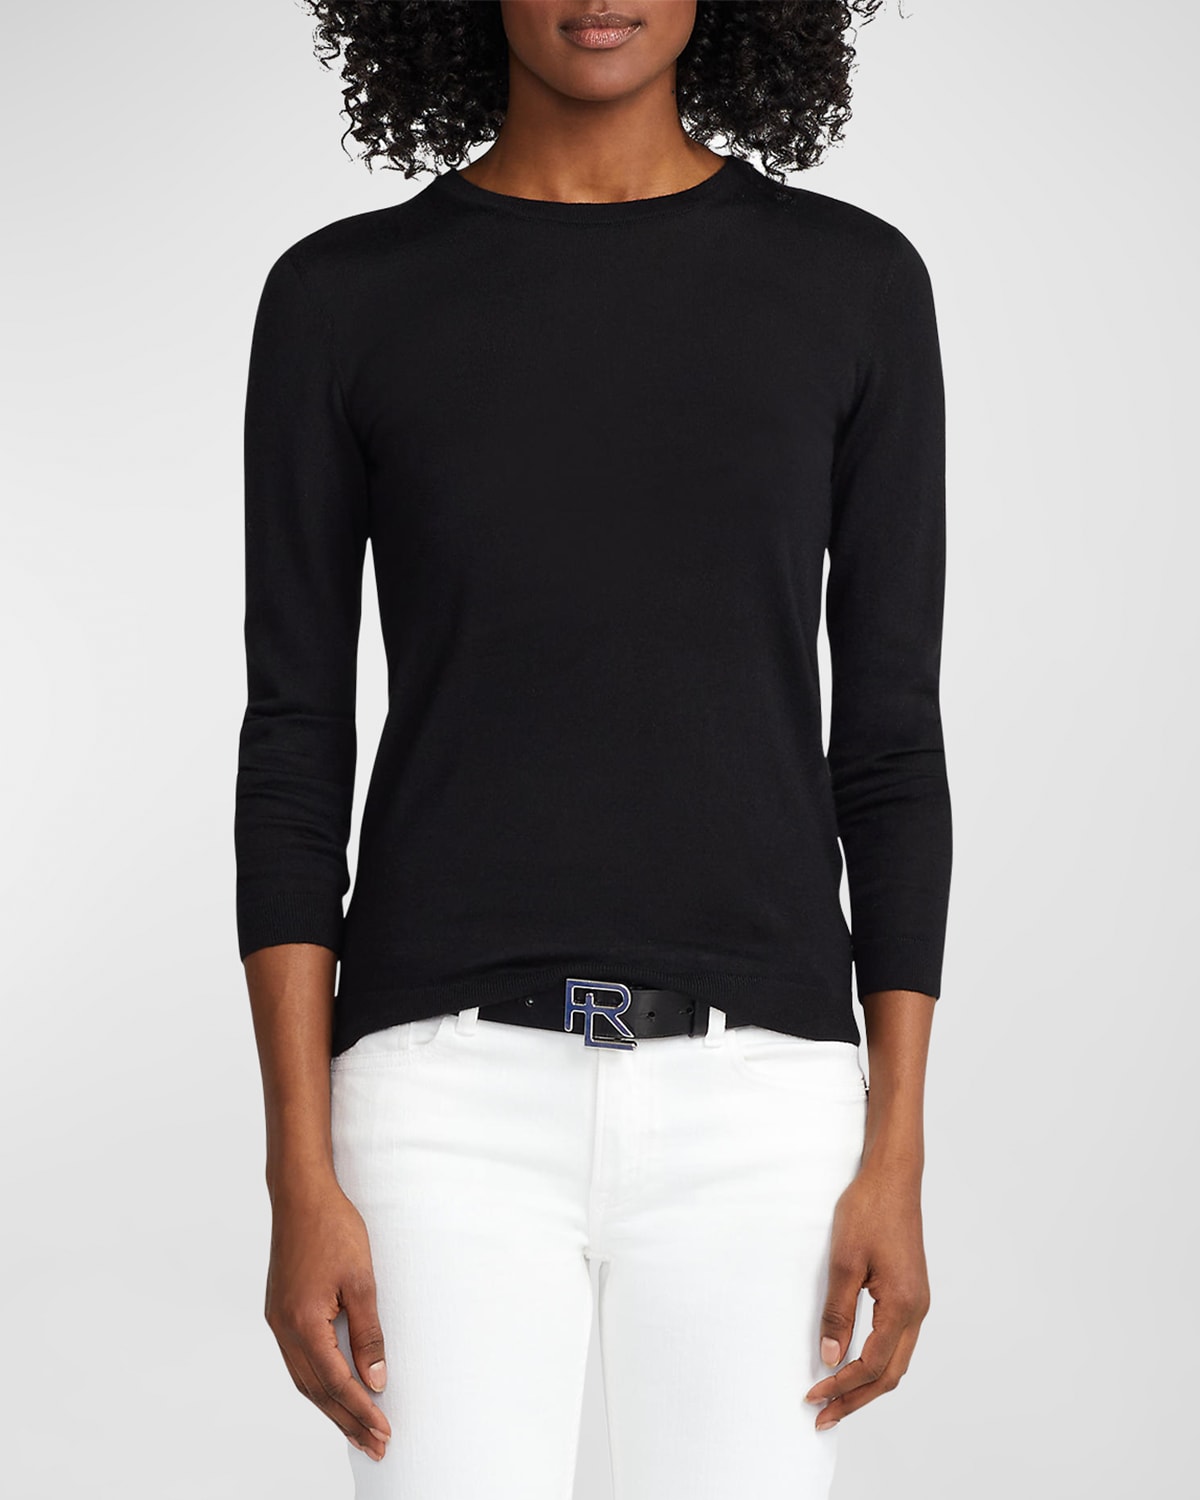 Long-Sleeve Cashmere Crewneck Sweater, Black